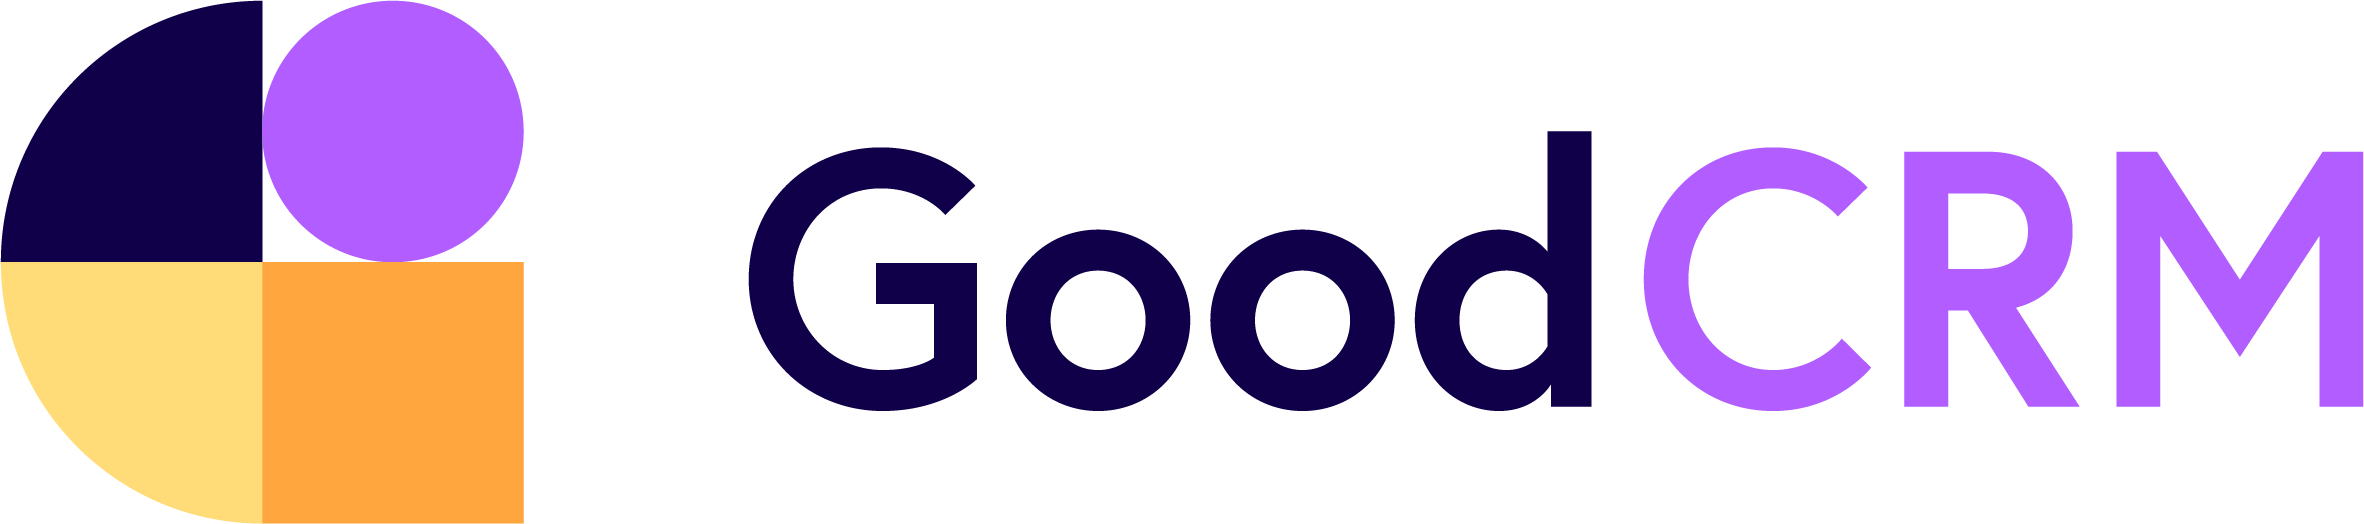 GoodCRM logo long